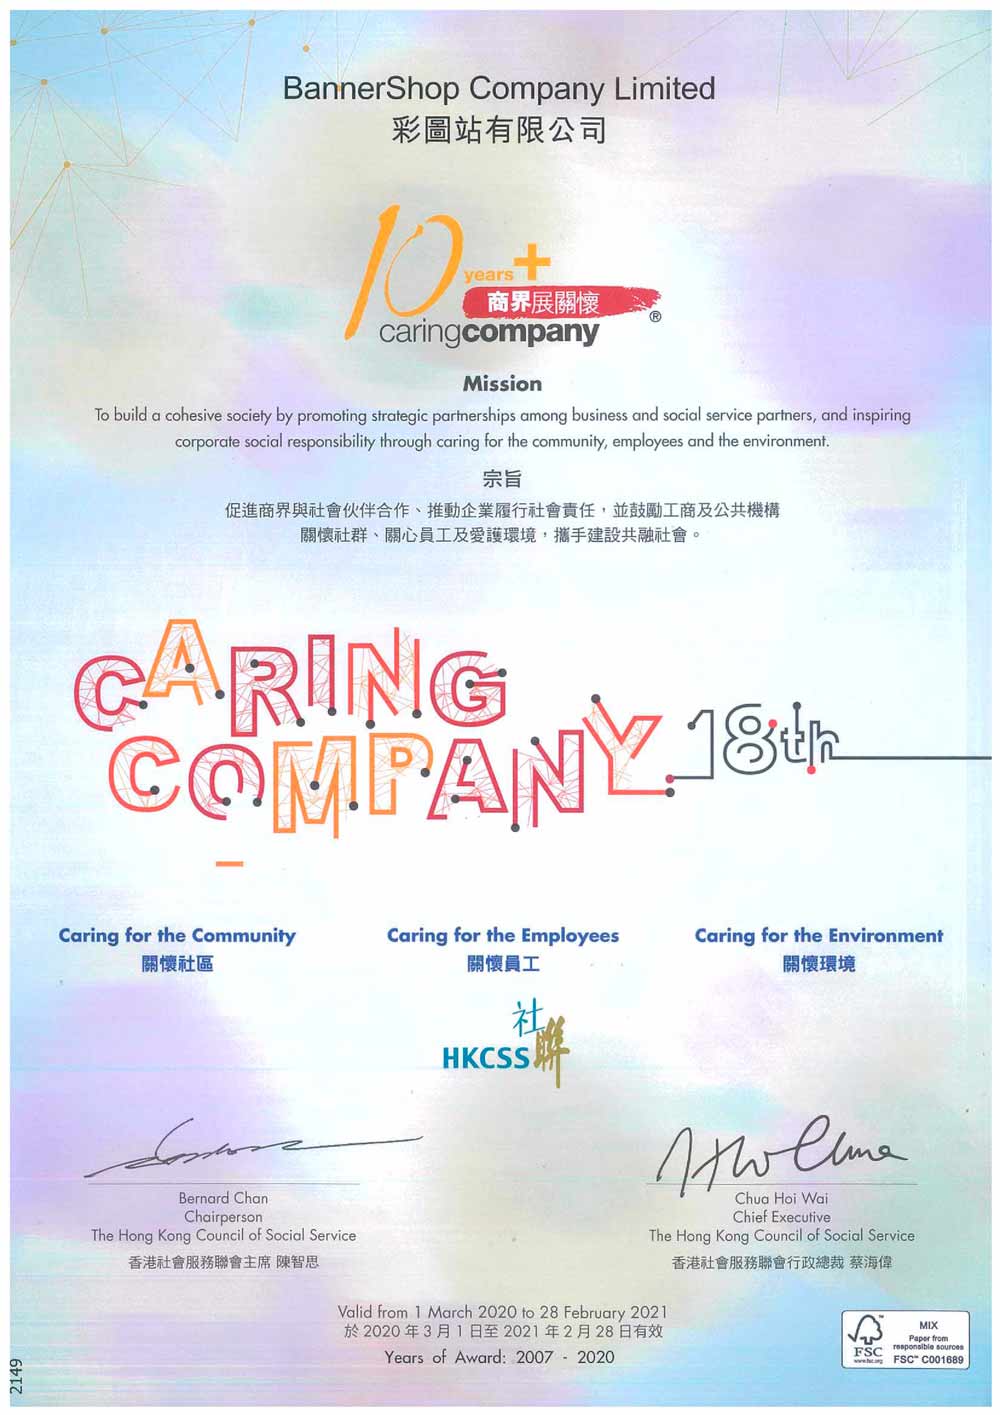 Bannershop awarded the “10 Consecutive Years Caring Company award”